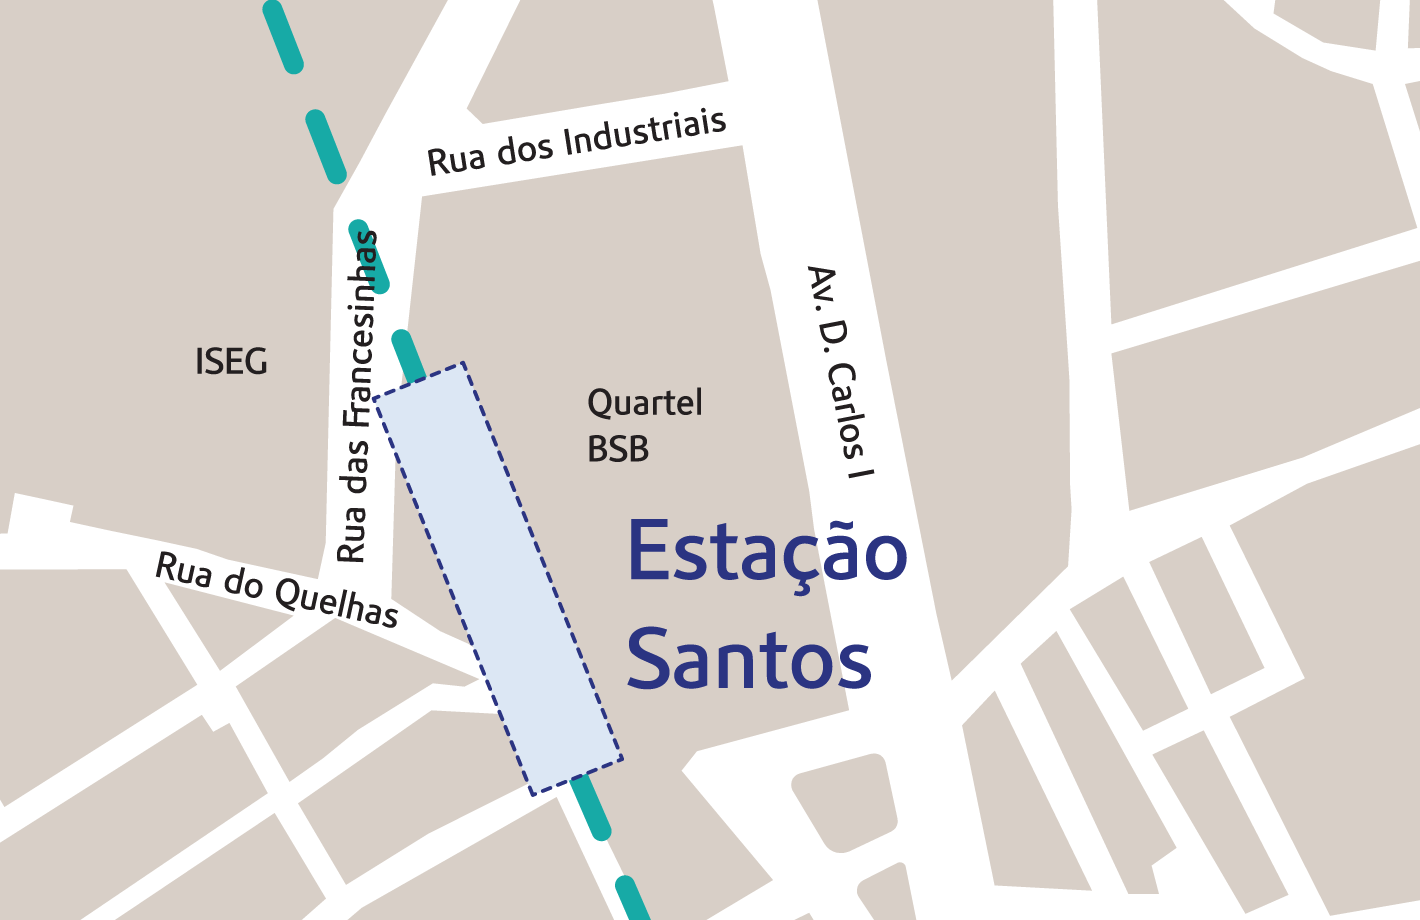 Network expansion plan - Site do Metropolitano de Lisboa, EPE - Company